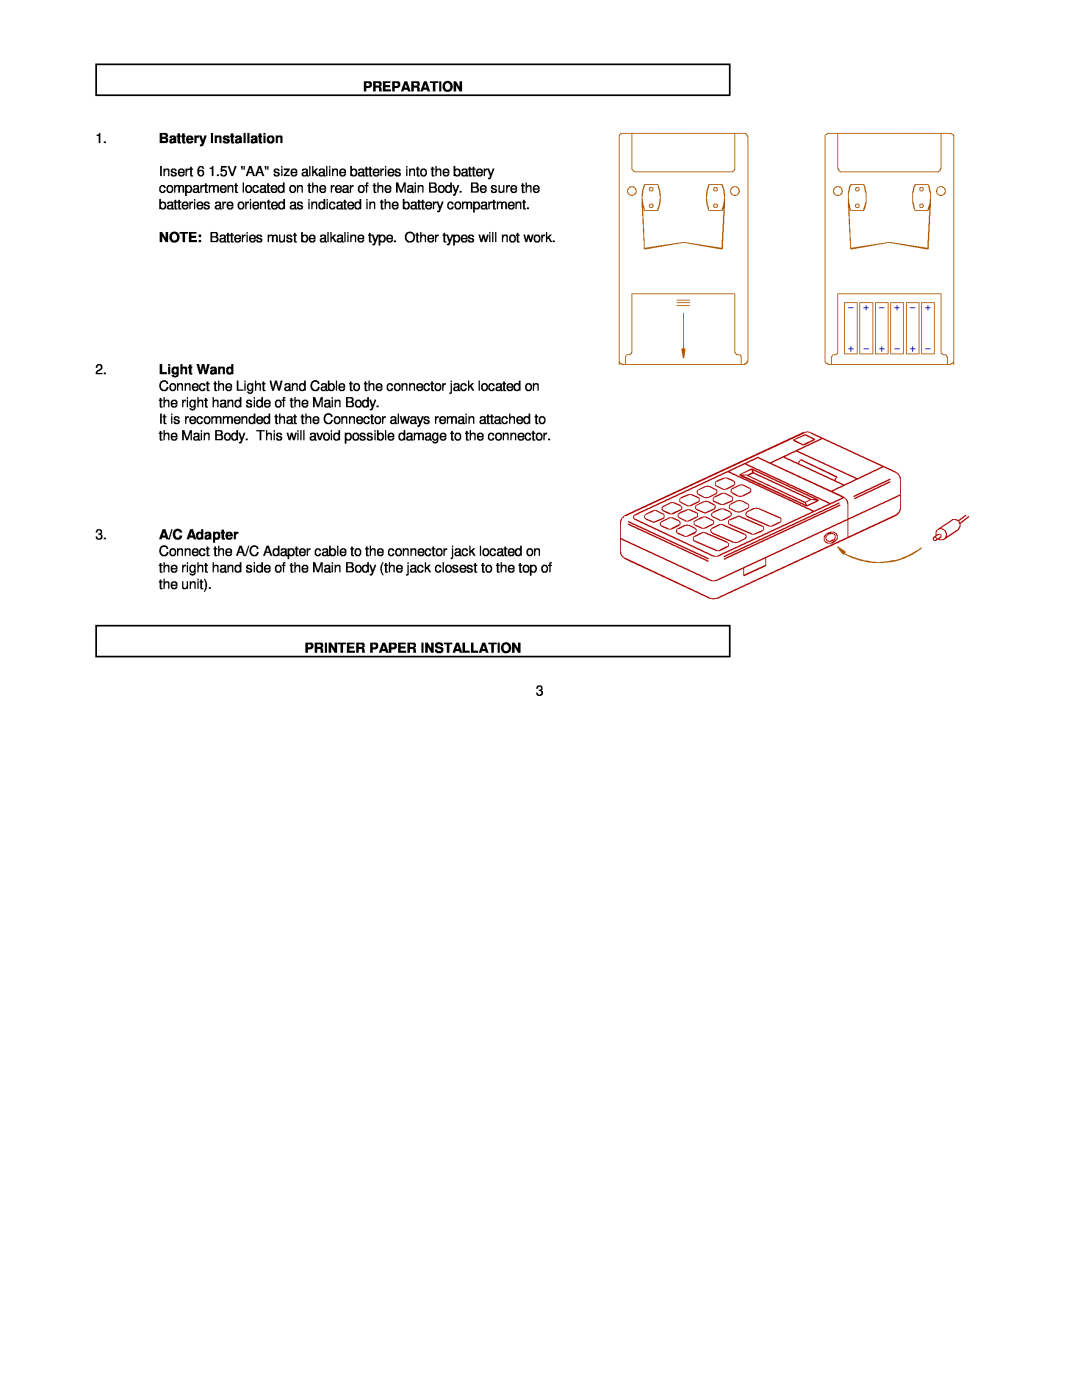 Futrex 5000A/ZL, 5000A/WL manual PREPARATION 1. Battery Installation, Light Wand, 3. A/C Adapter, Printer Paper Installation 